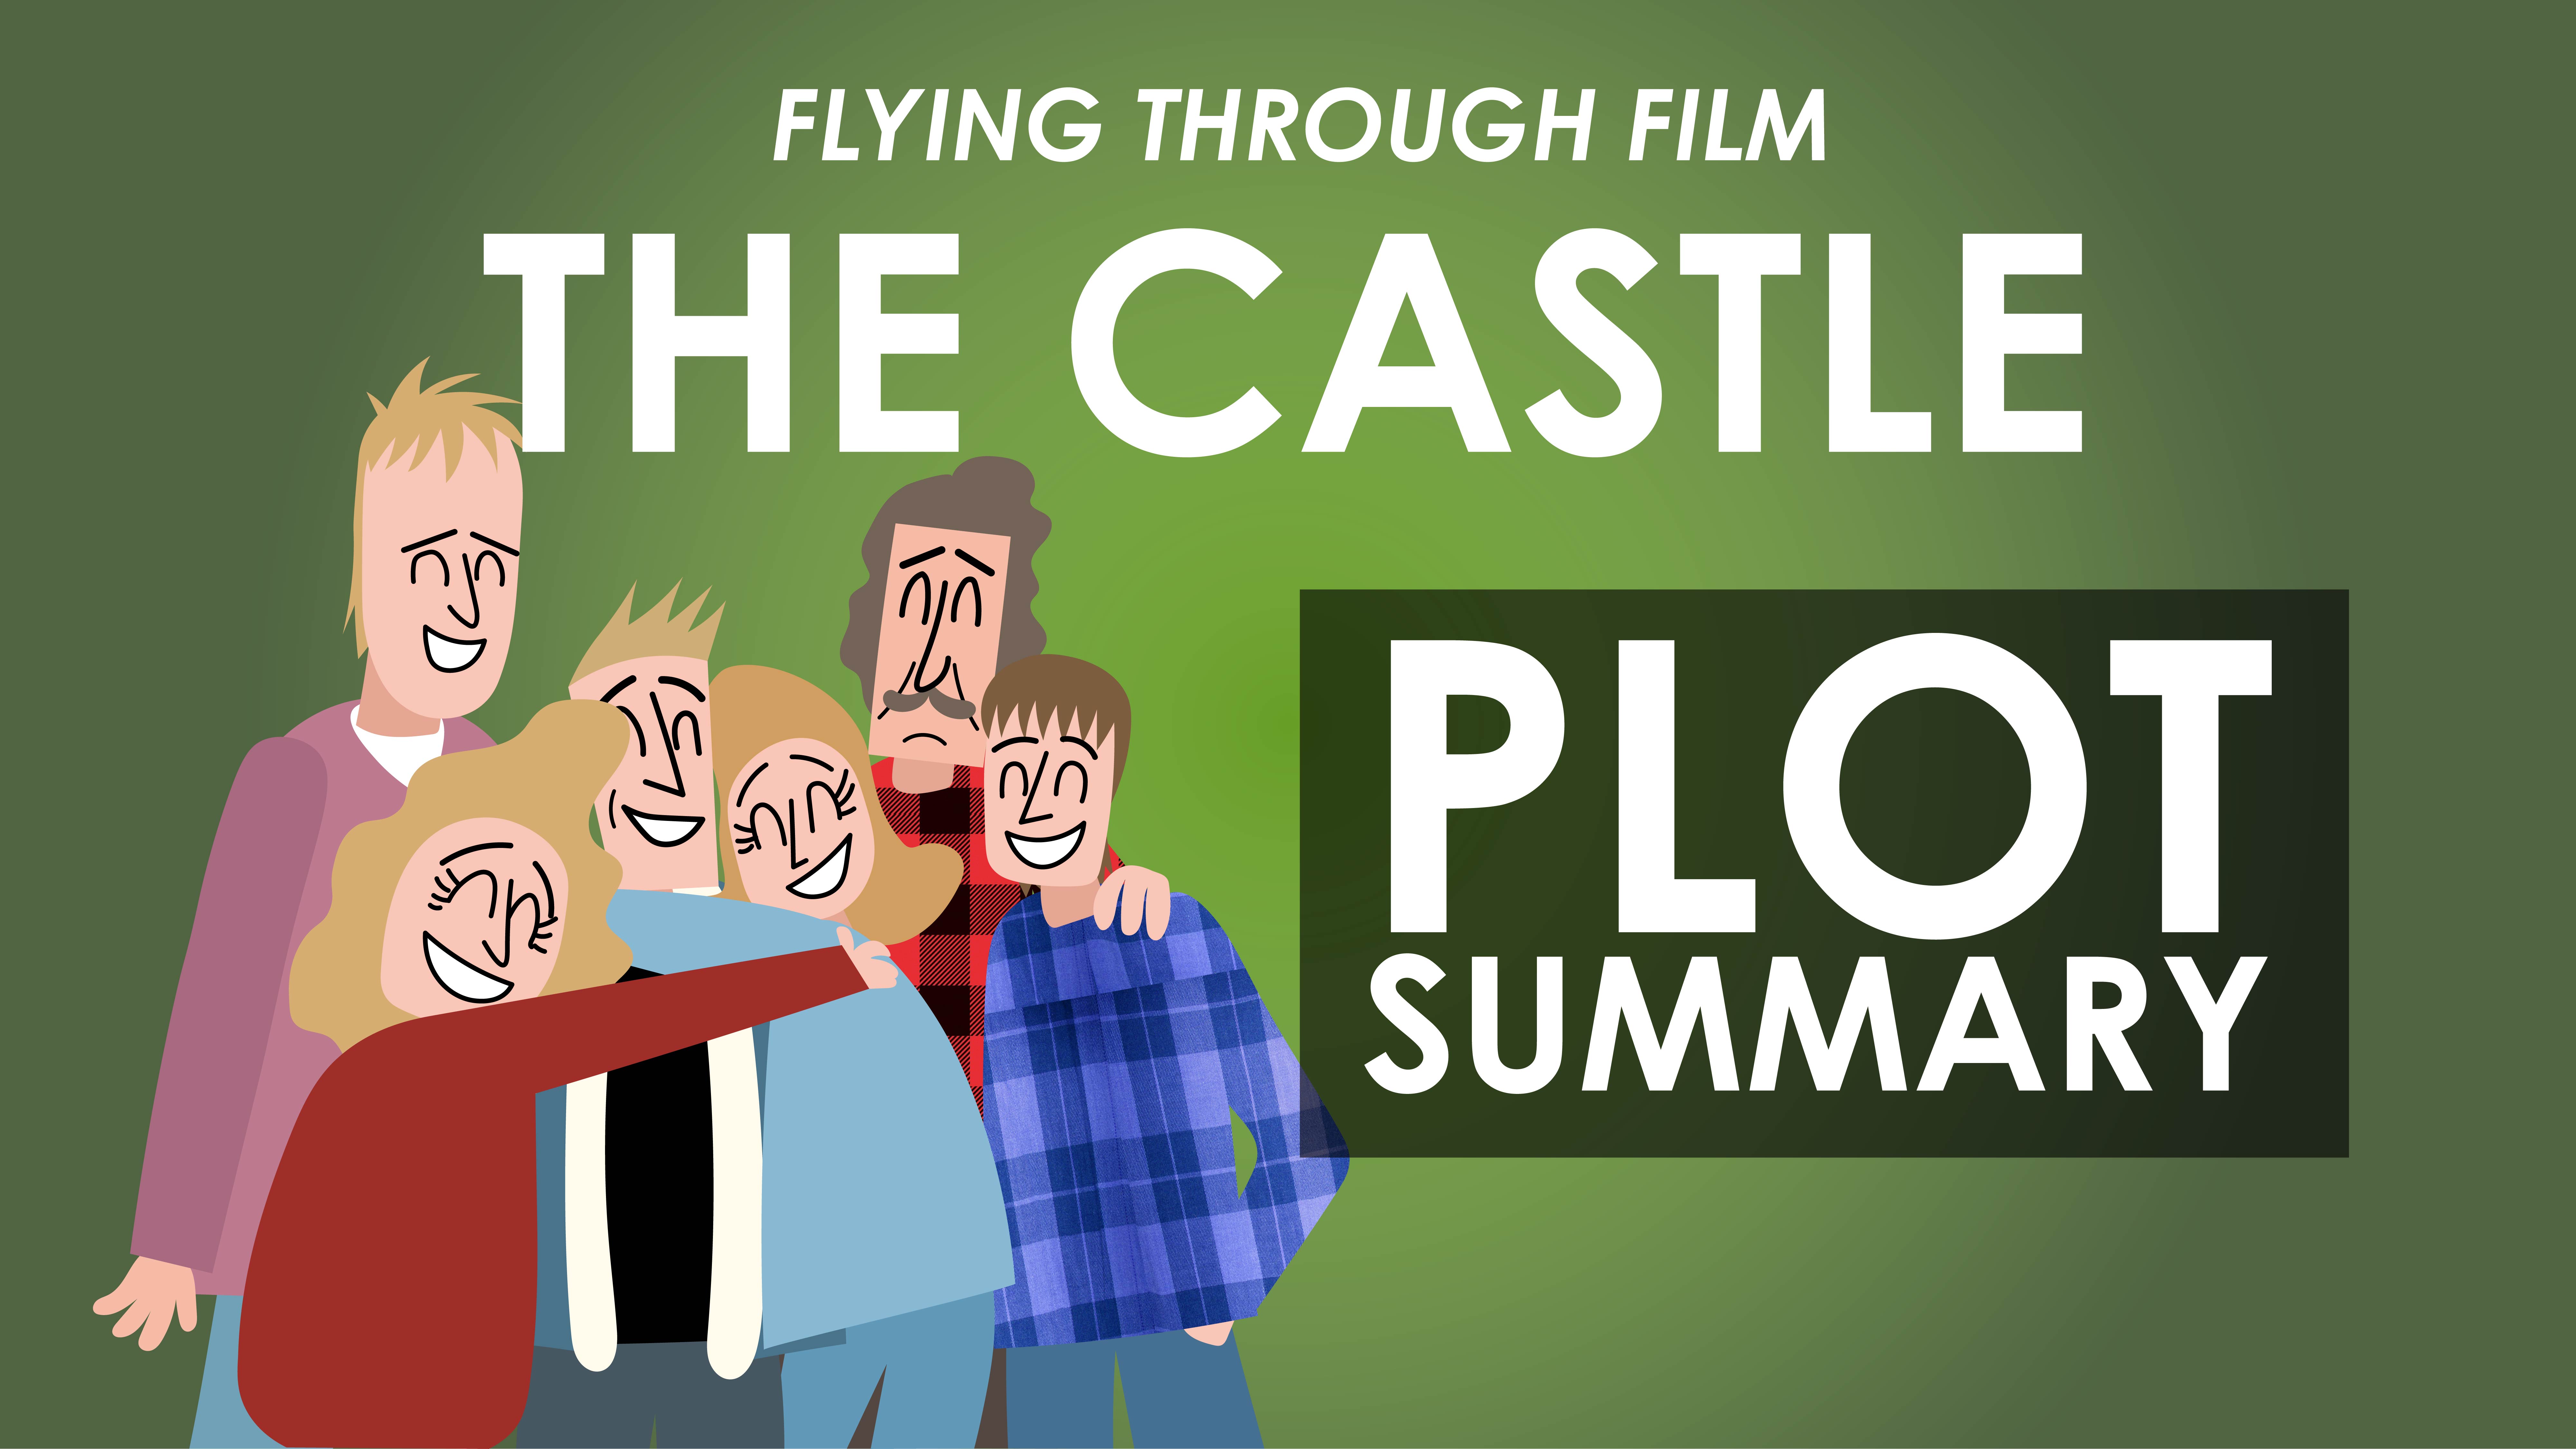 The Castle - Plot Summary - Flying Through Film Series